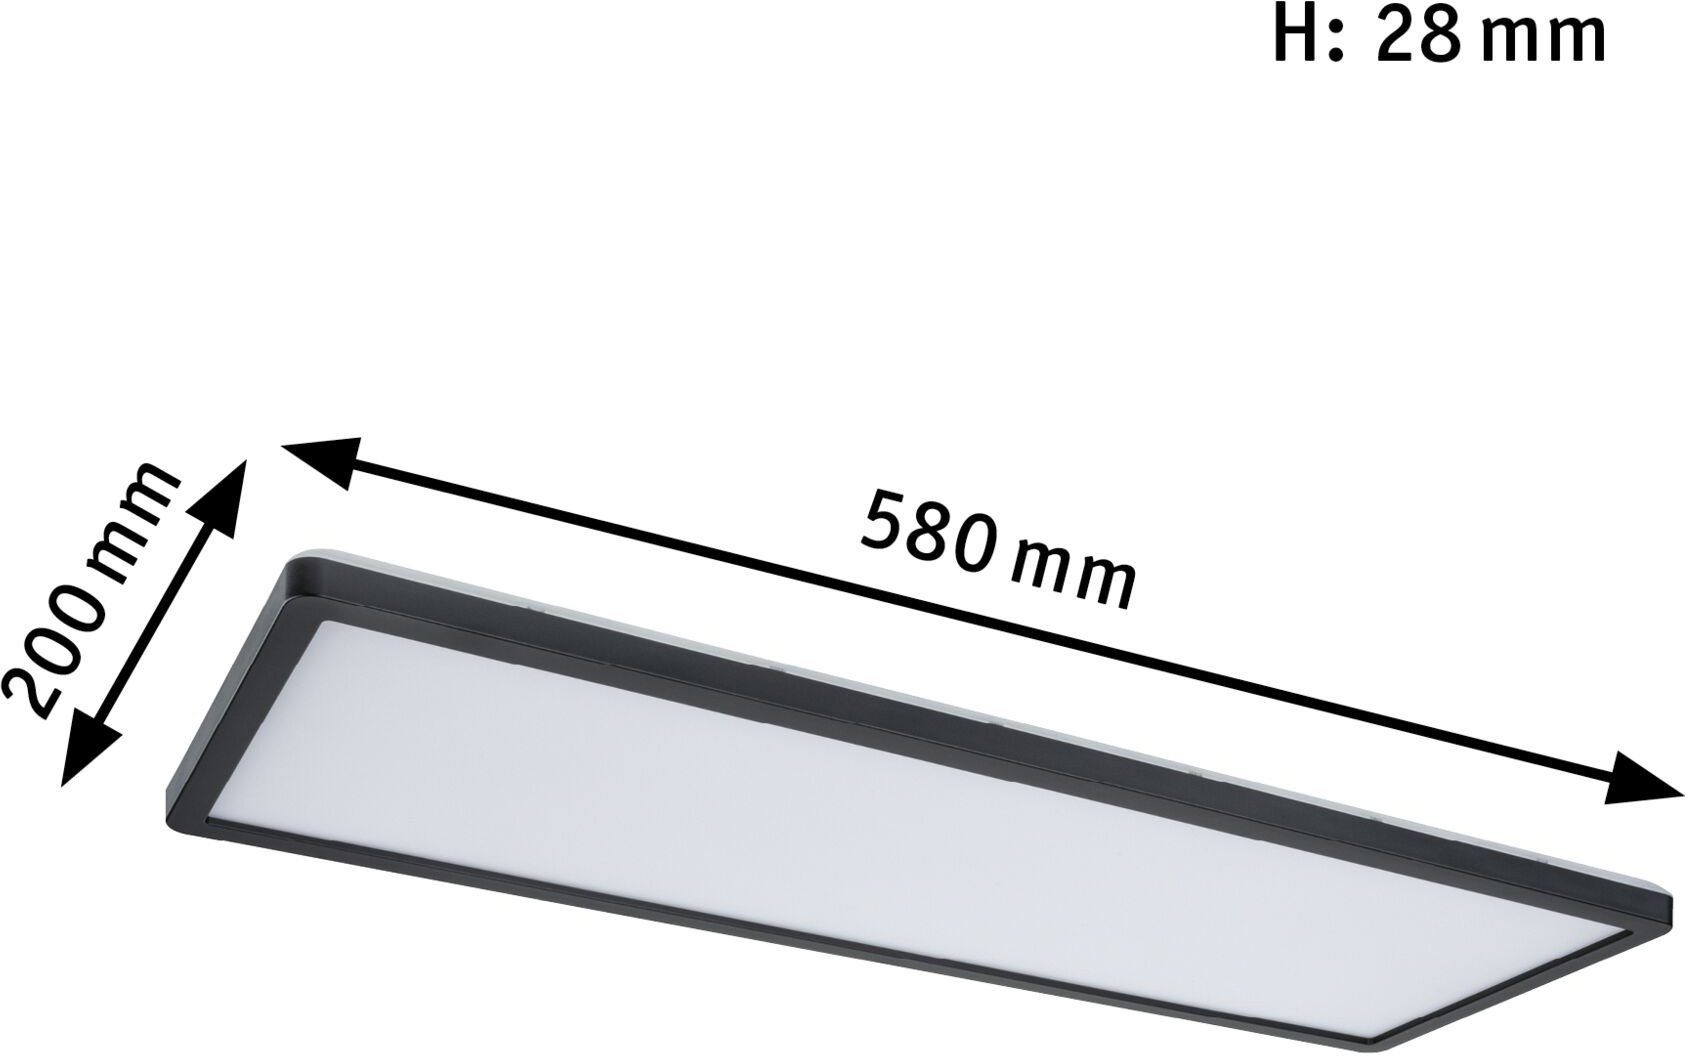 LED LED fest Warmweiß Atria Shine, Paulmann integriert, Panel